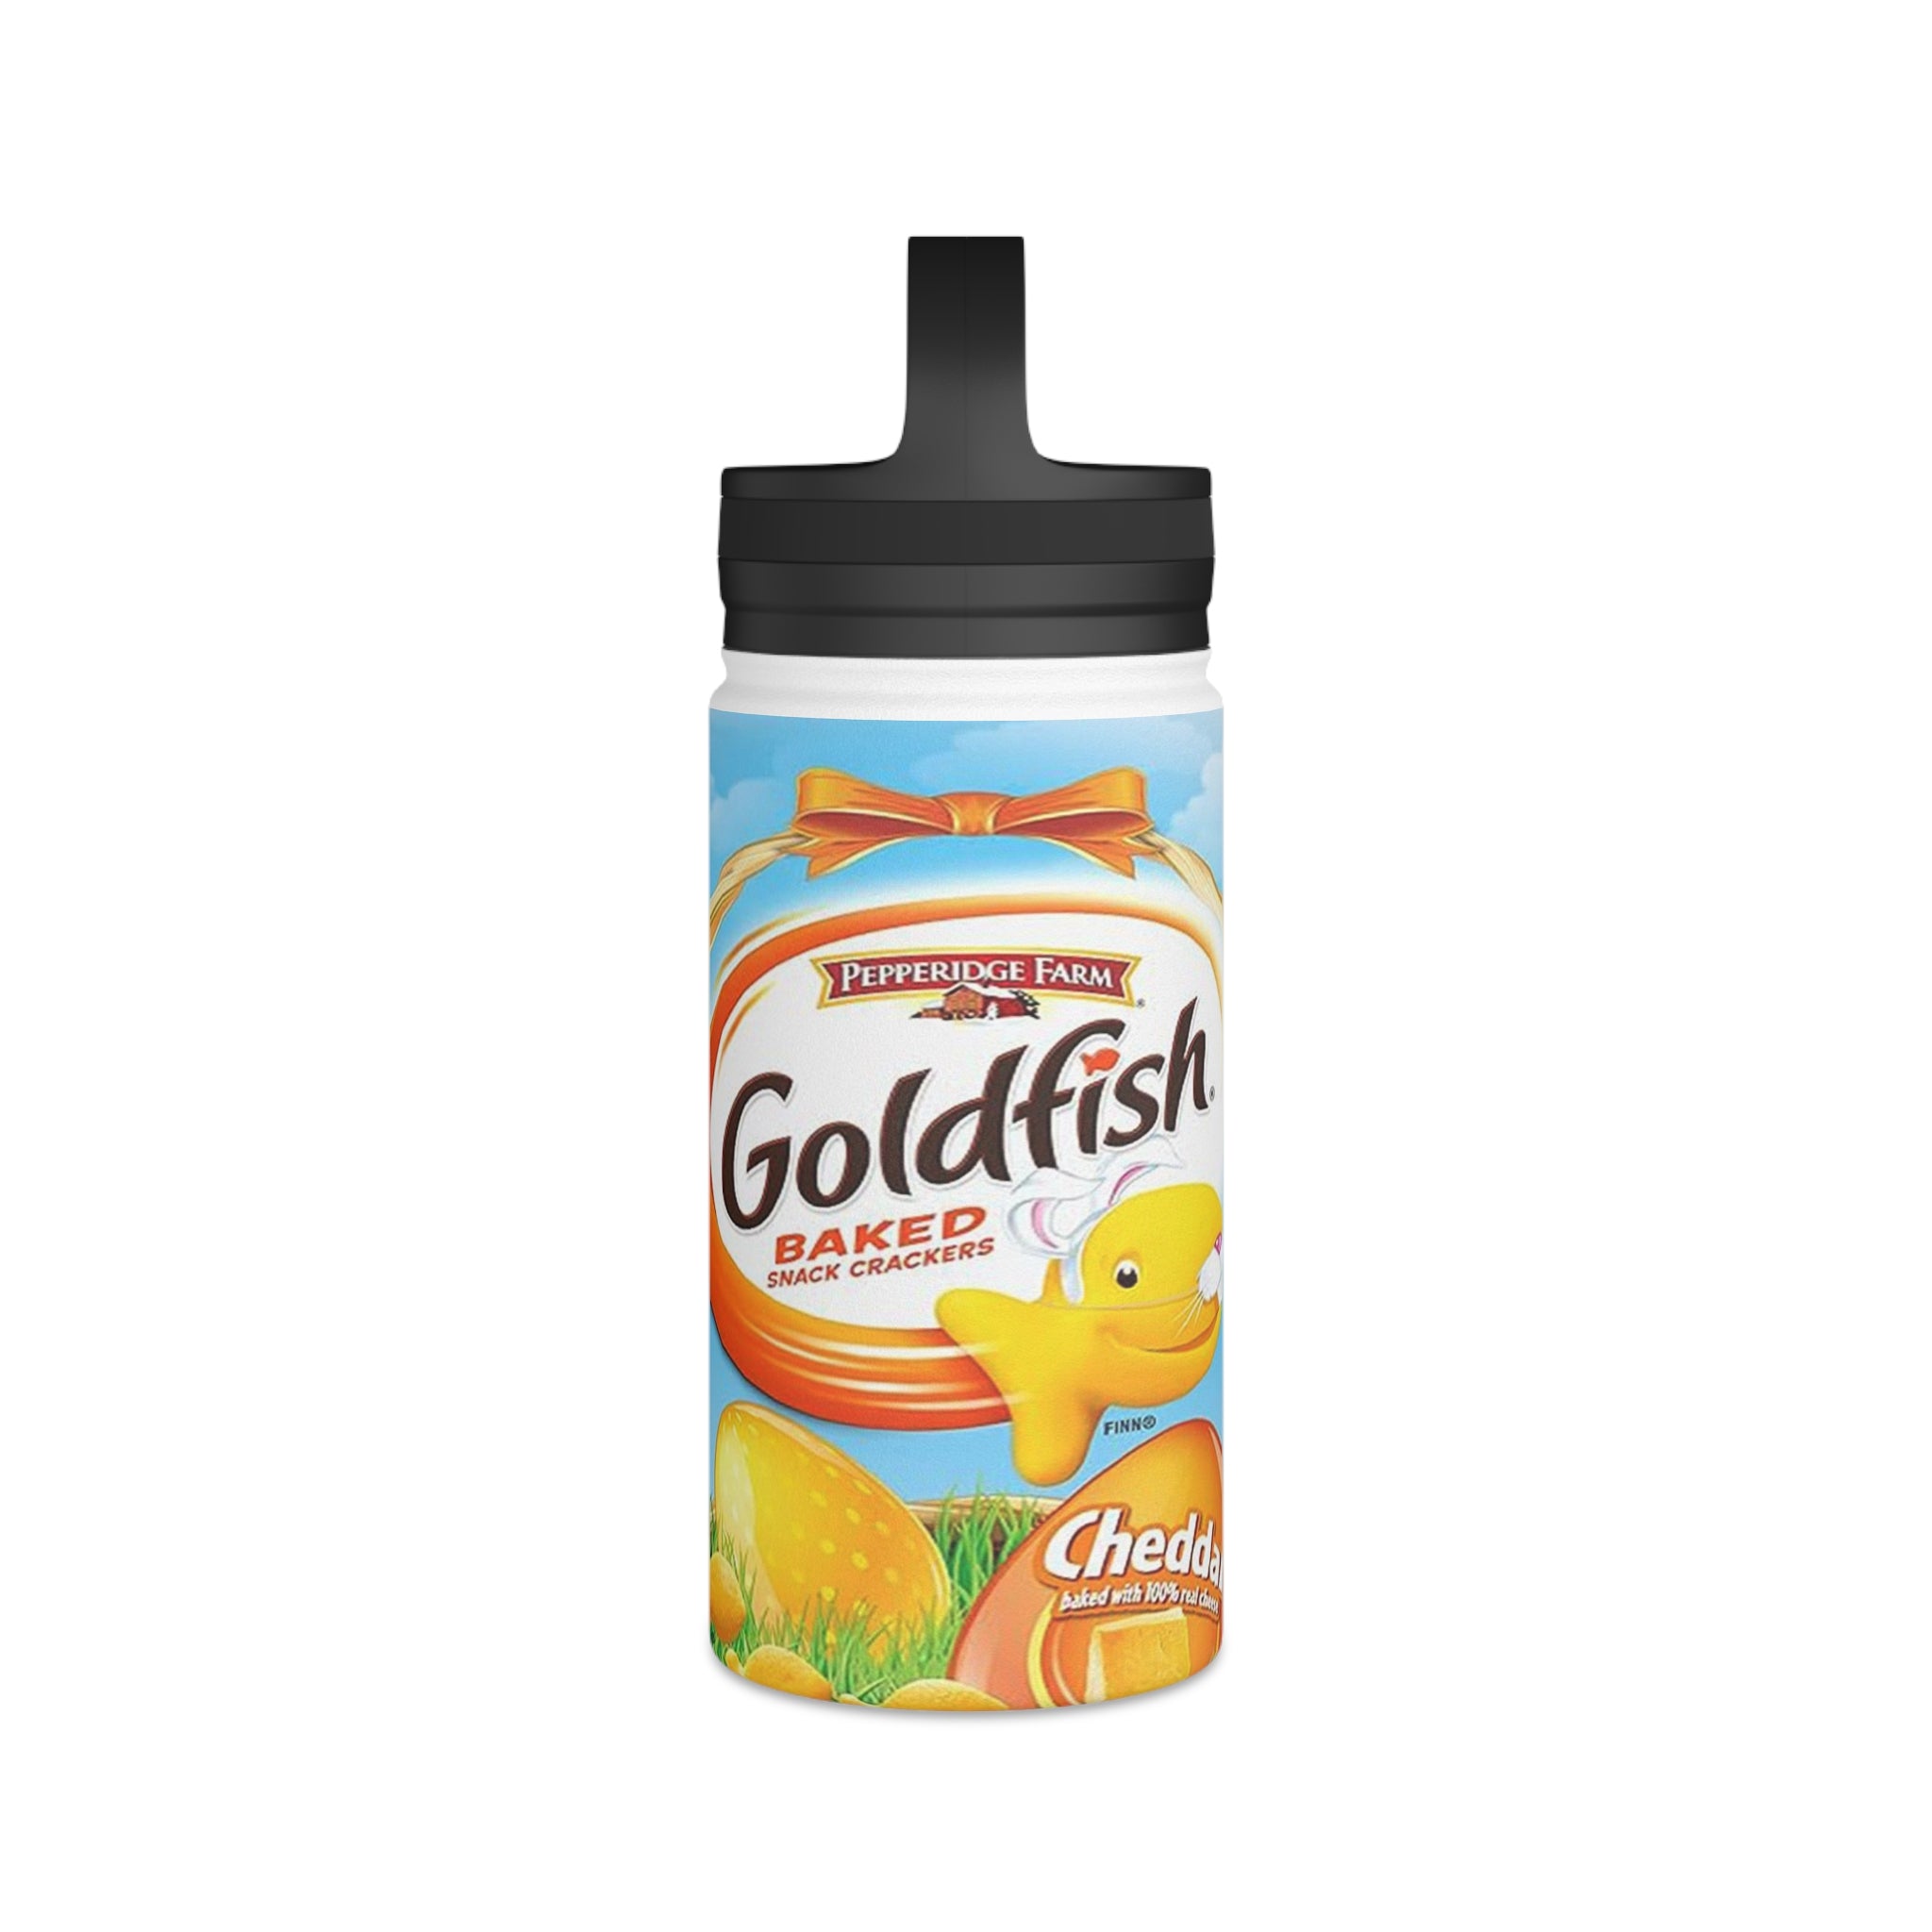 Pepperidge Farm Goldfish Cheddar Crackers Stainless Steel Water Bottle, Handle Lid